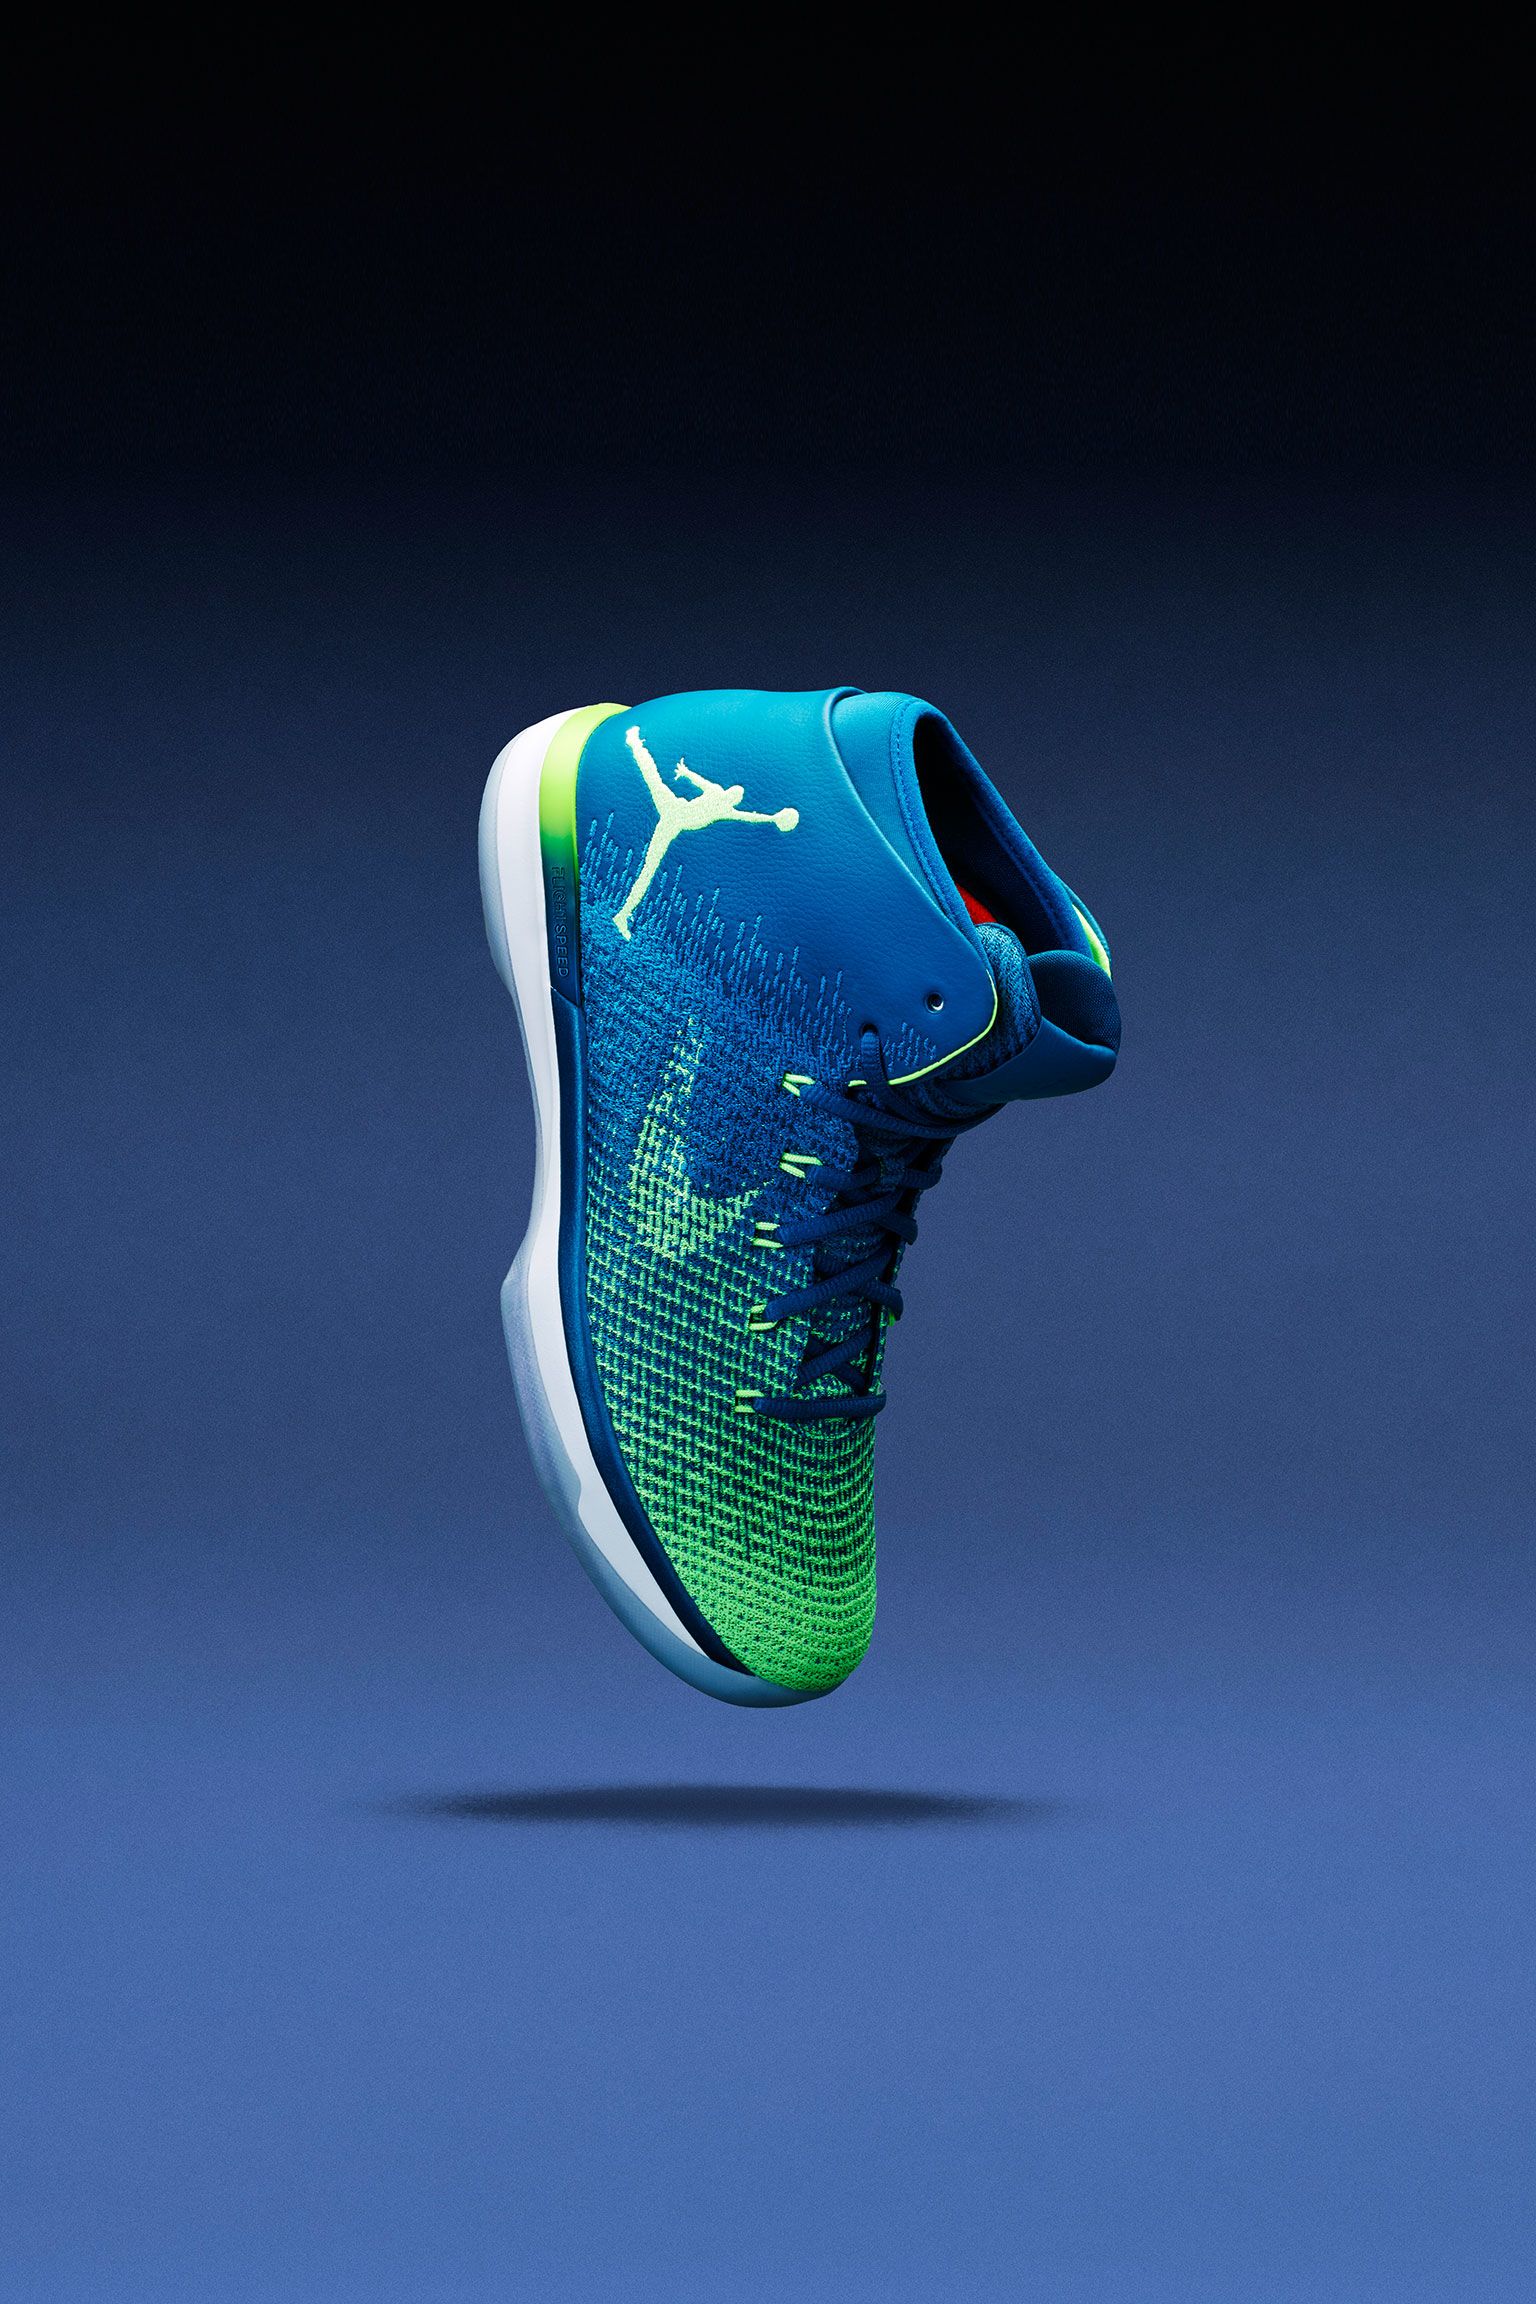 Precipicio Enviar altura Air Jordan 31 'Green Abyss' Release Date. Nike SNKRS